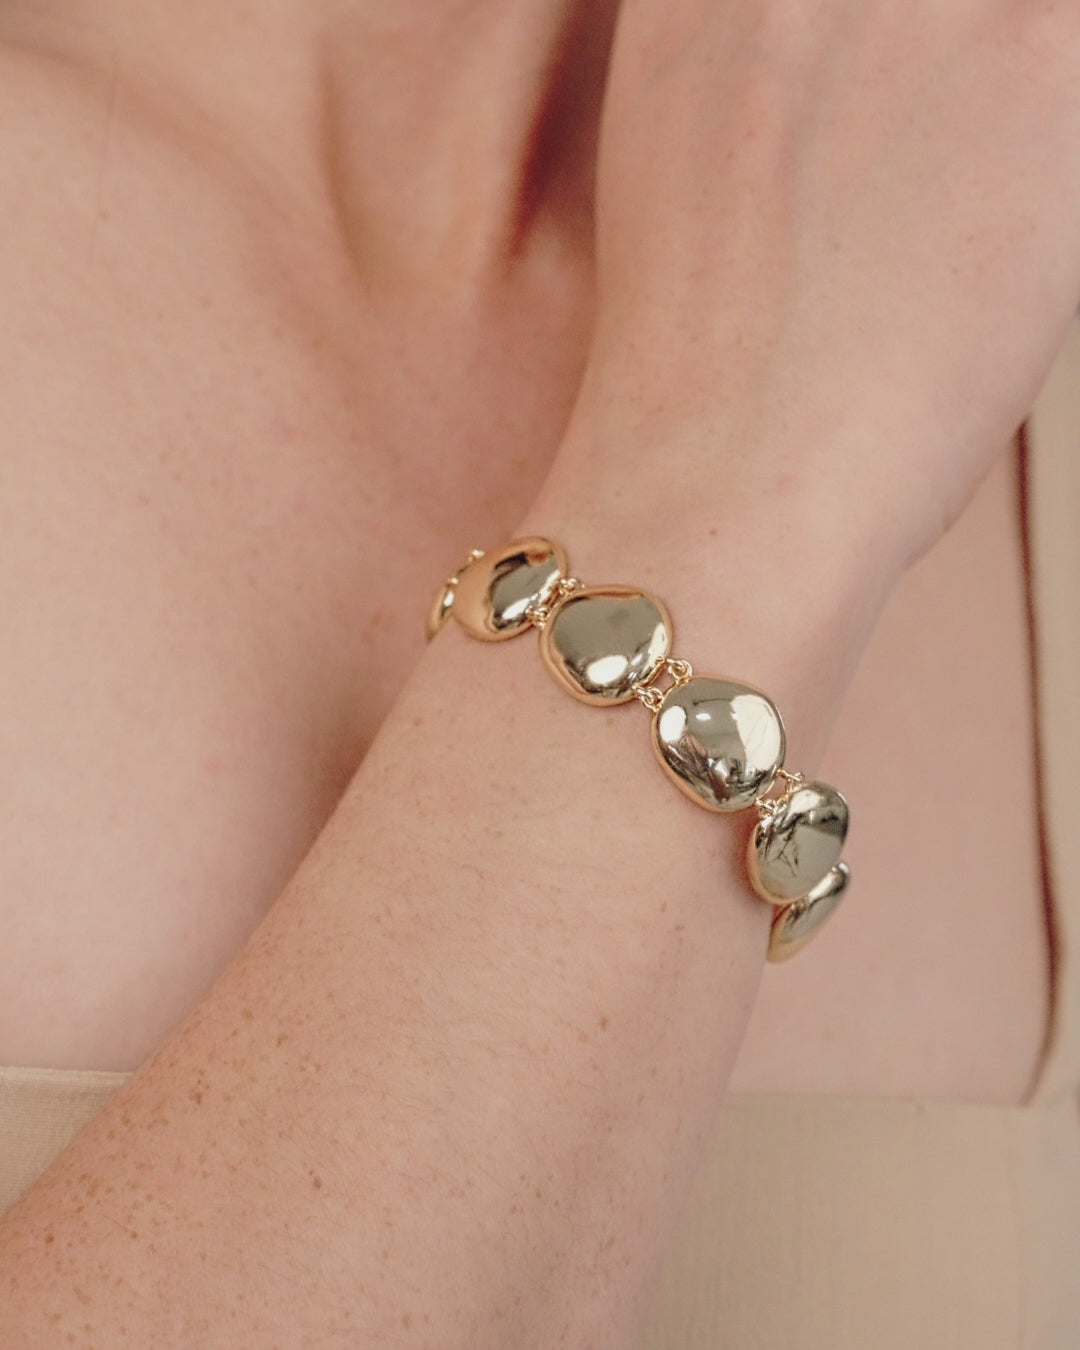 Polished Pebble Linked Bracelet in gold in video